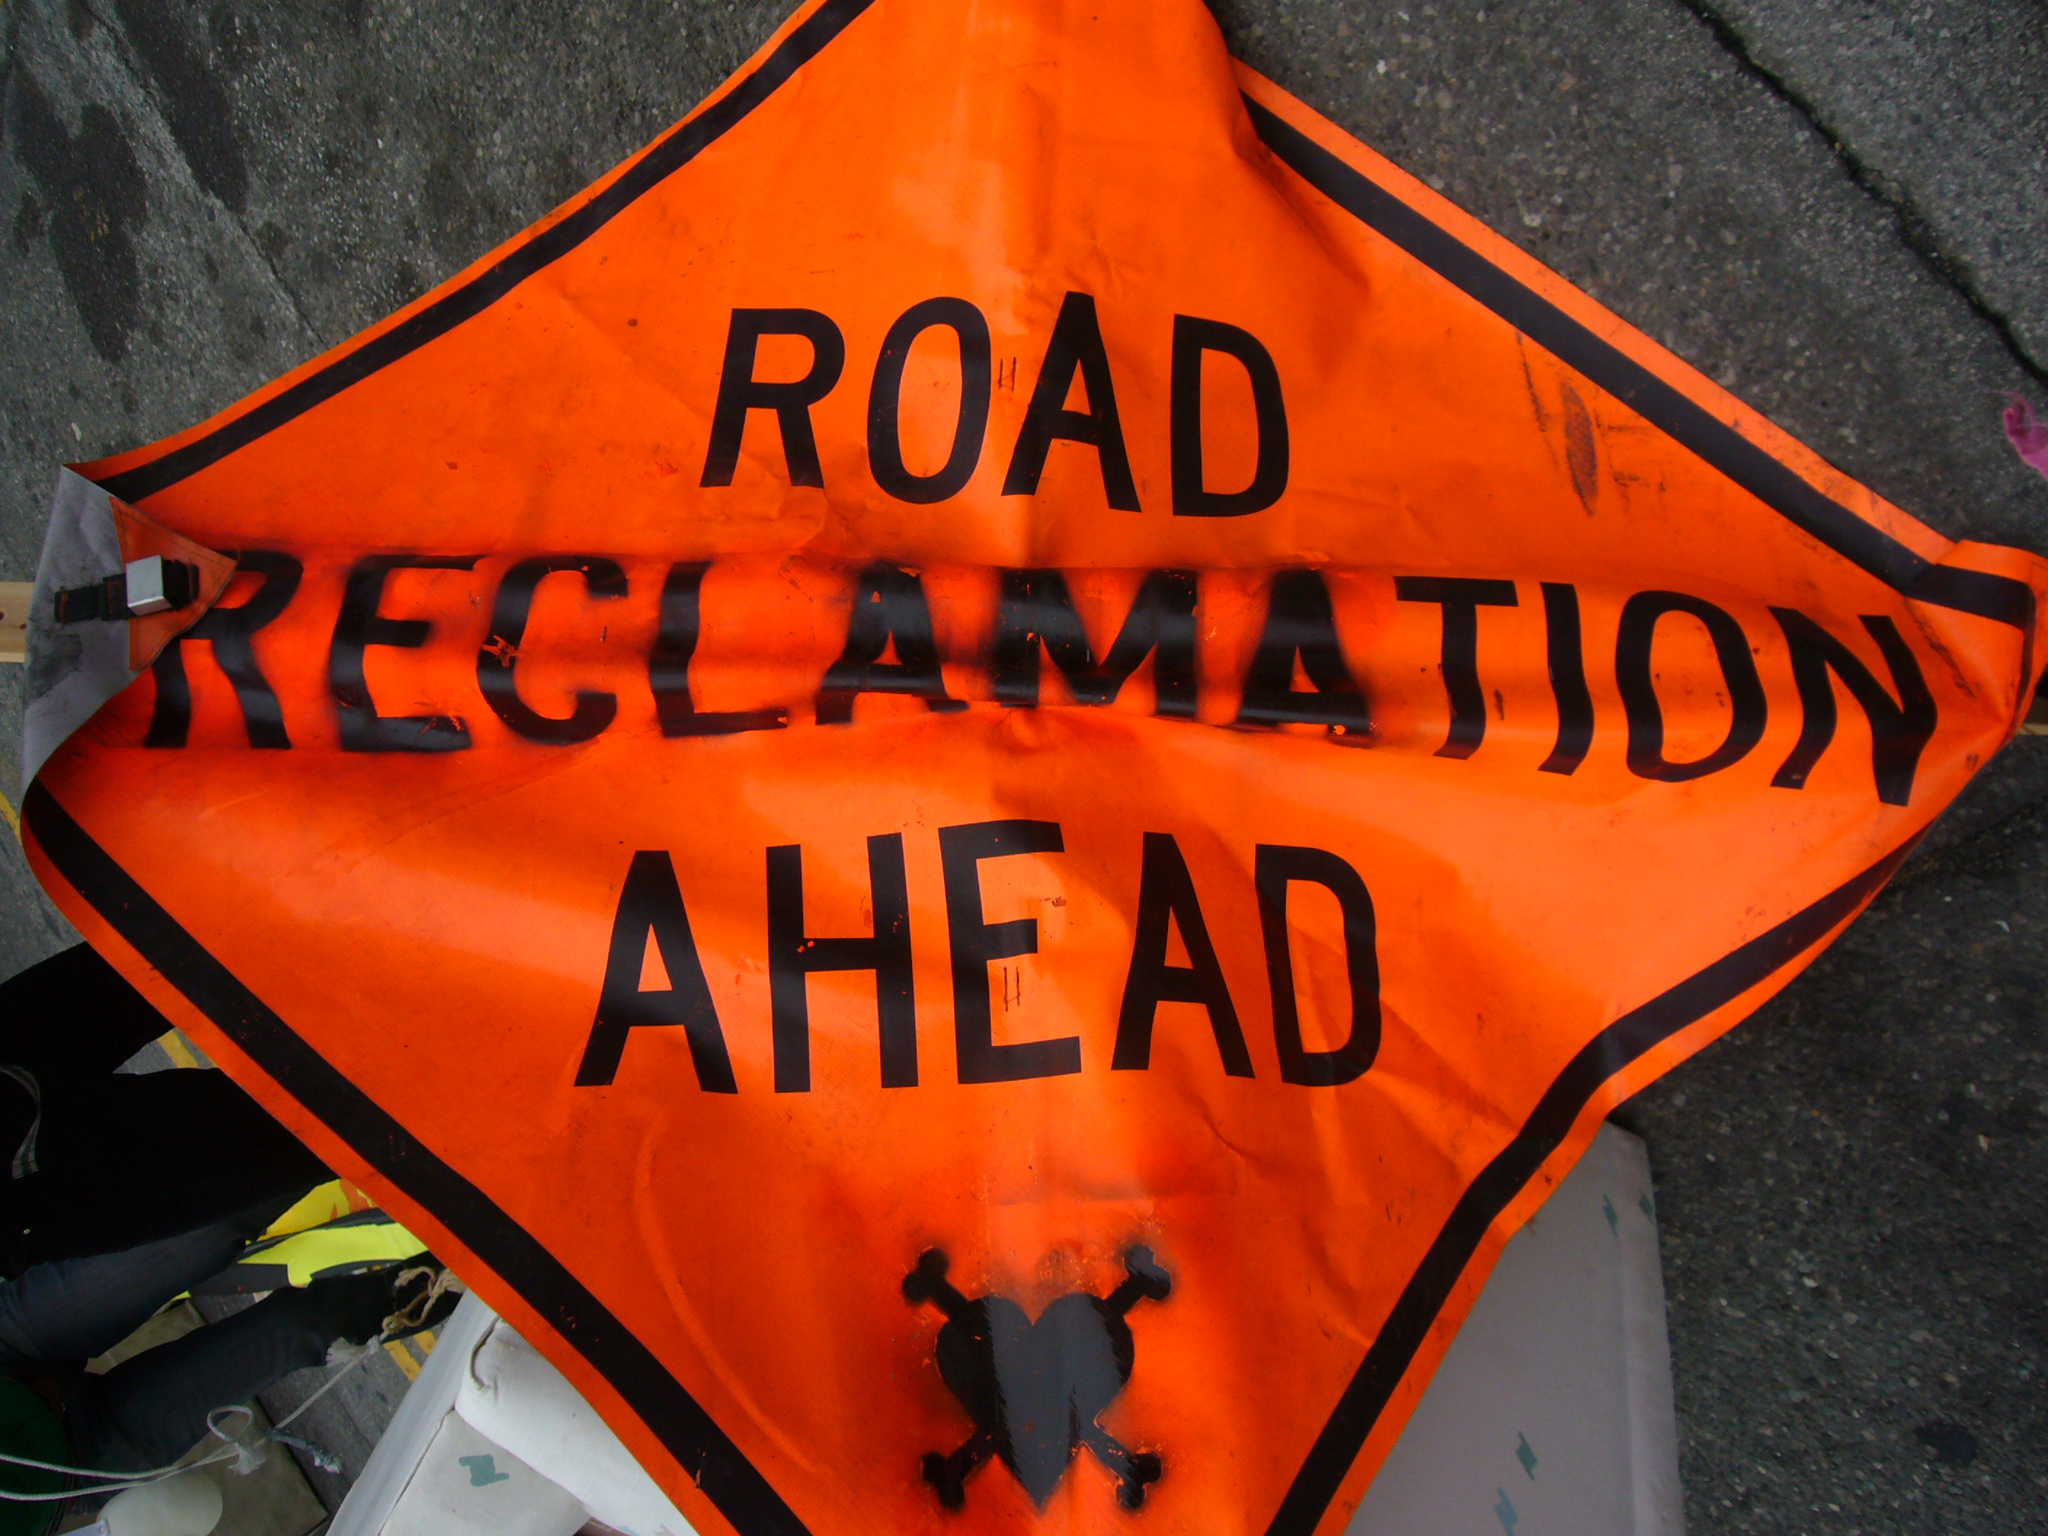 08_road_reclamation_ahead